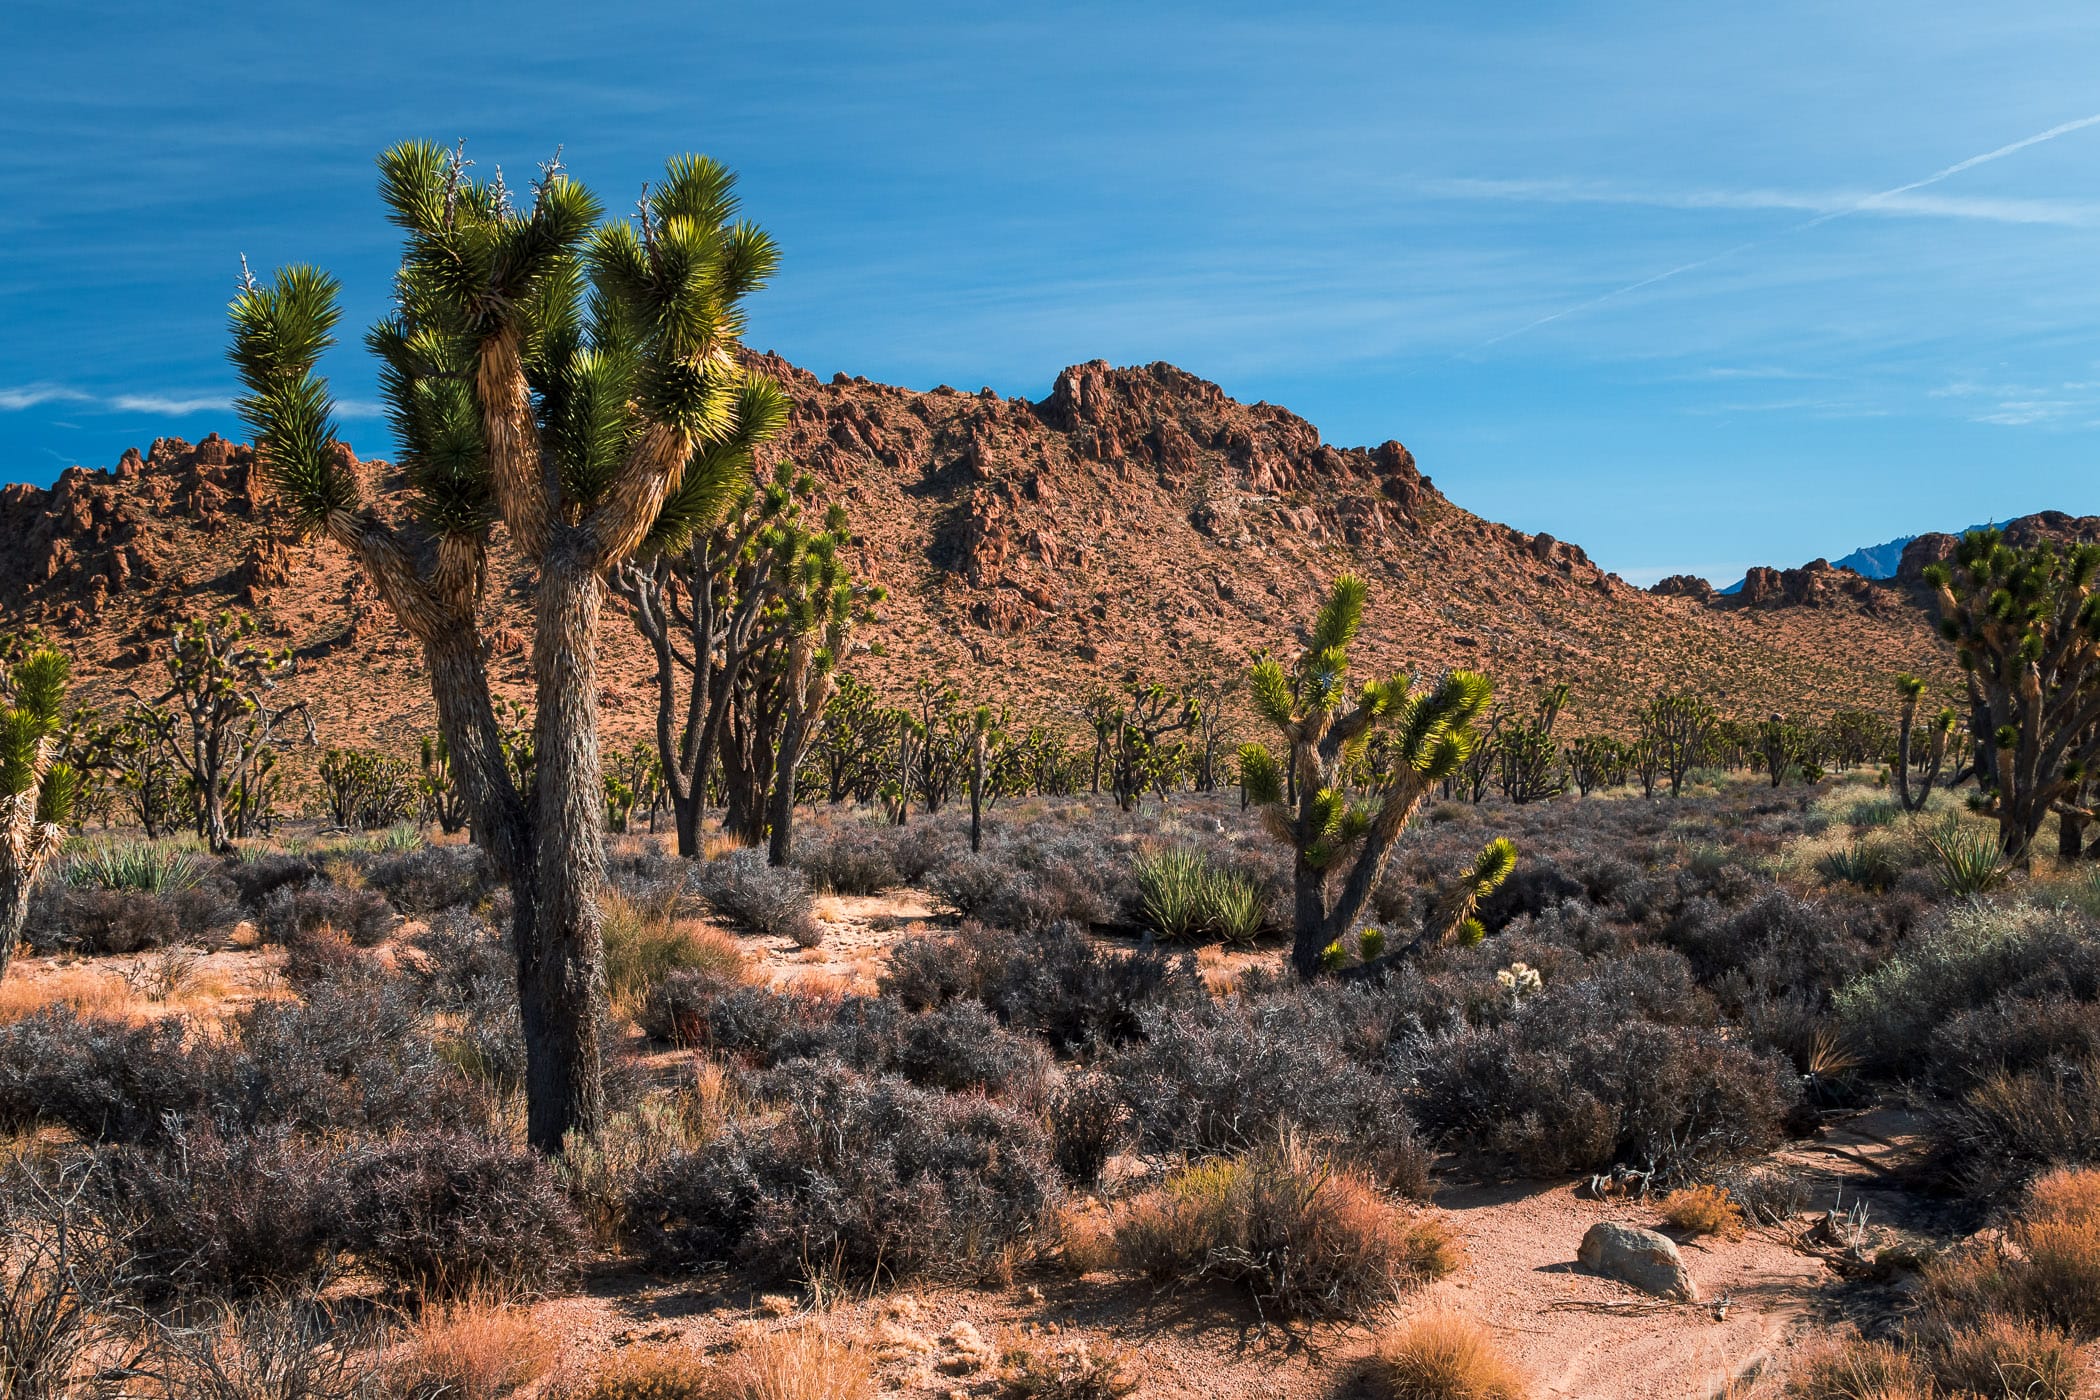 Joshua trees grow in the arid landscape of California's Mojave National Preserve.